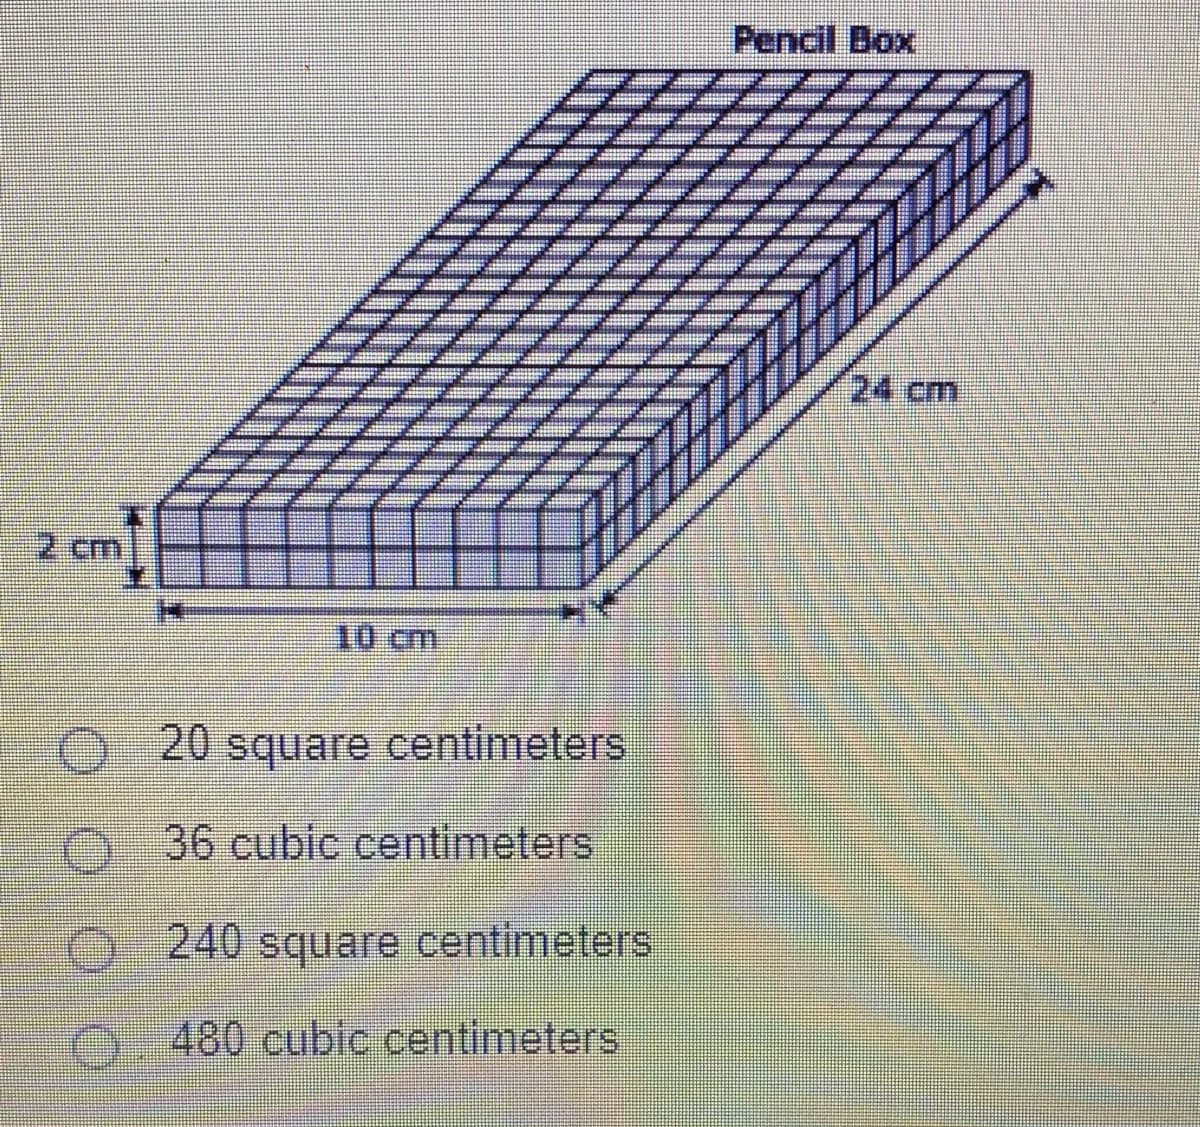 Pencil Box
24cm
2 cm
10 cm
20 square centimeters
O -36 cubic centimeters
O 240 square centimeters
O. 480 cubic centimeters
